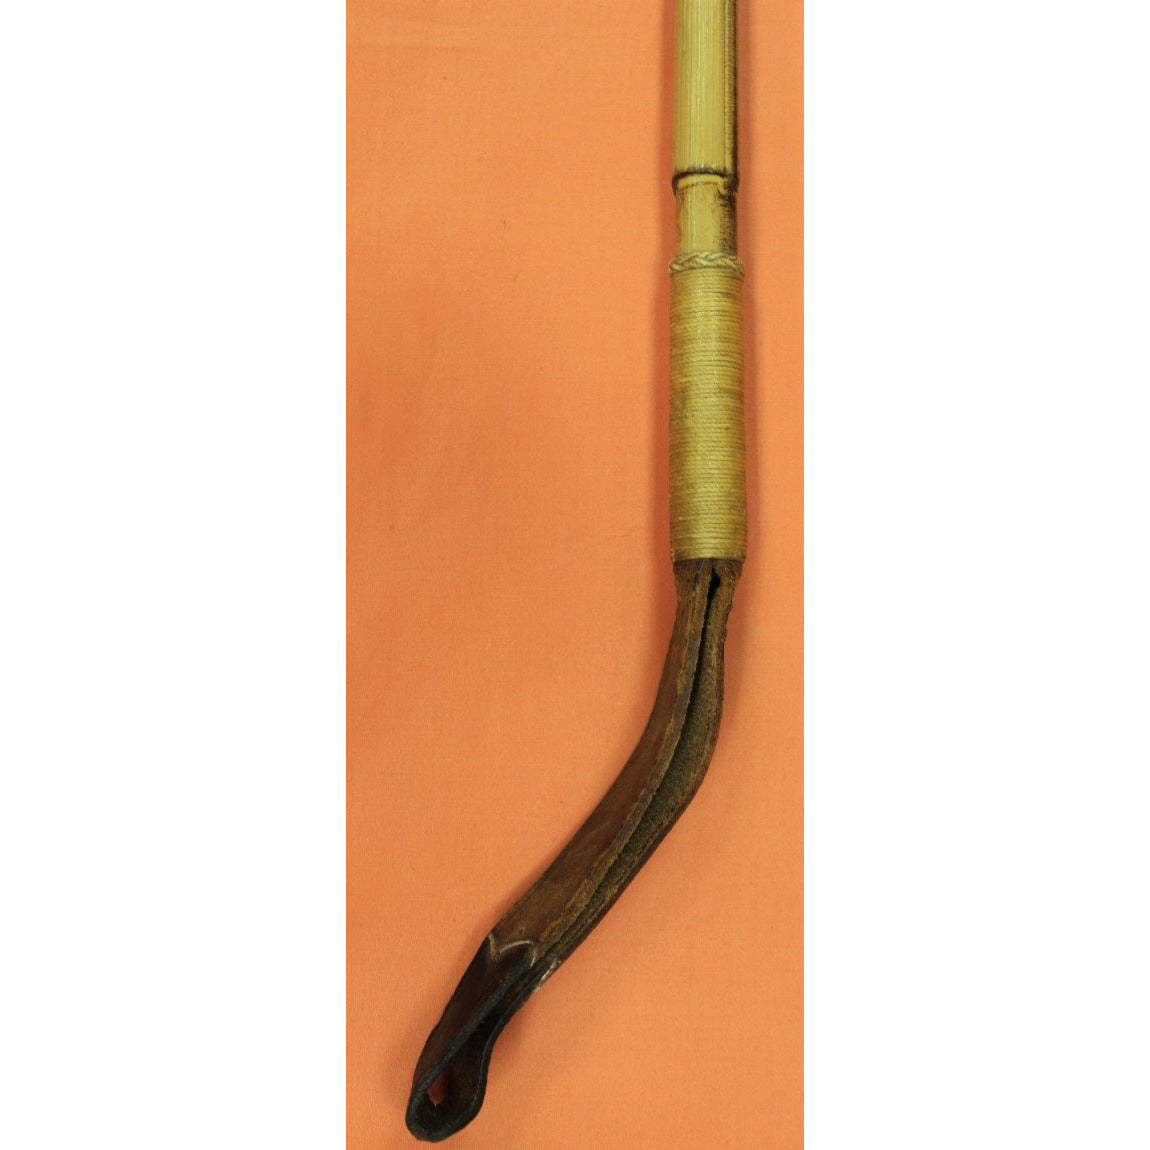 A vintage/ antique bamboo handled fishing gaff/ hook.